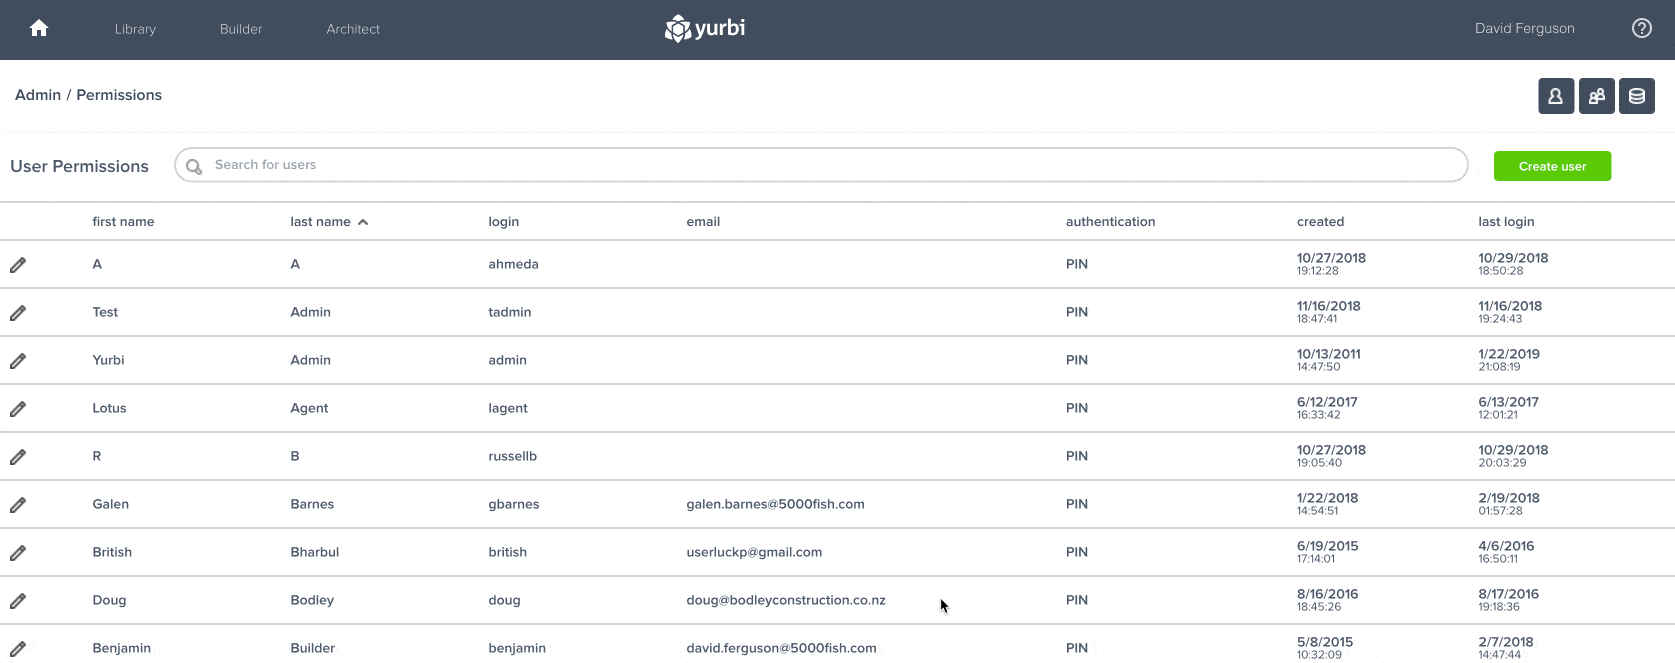 Yurbi v11 with new fuzzy search logic